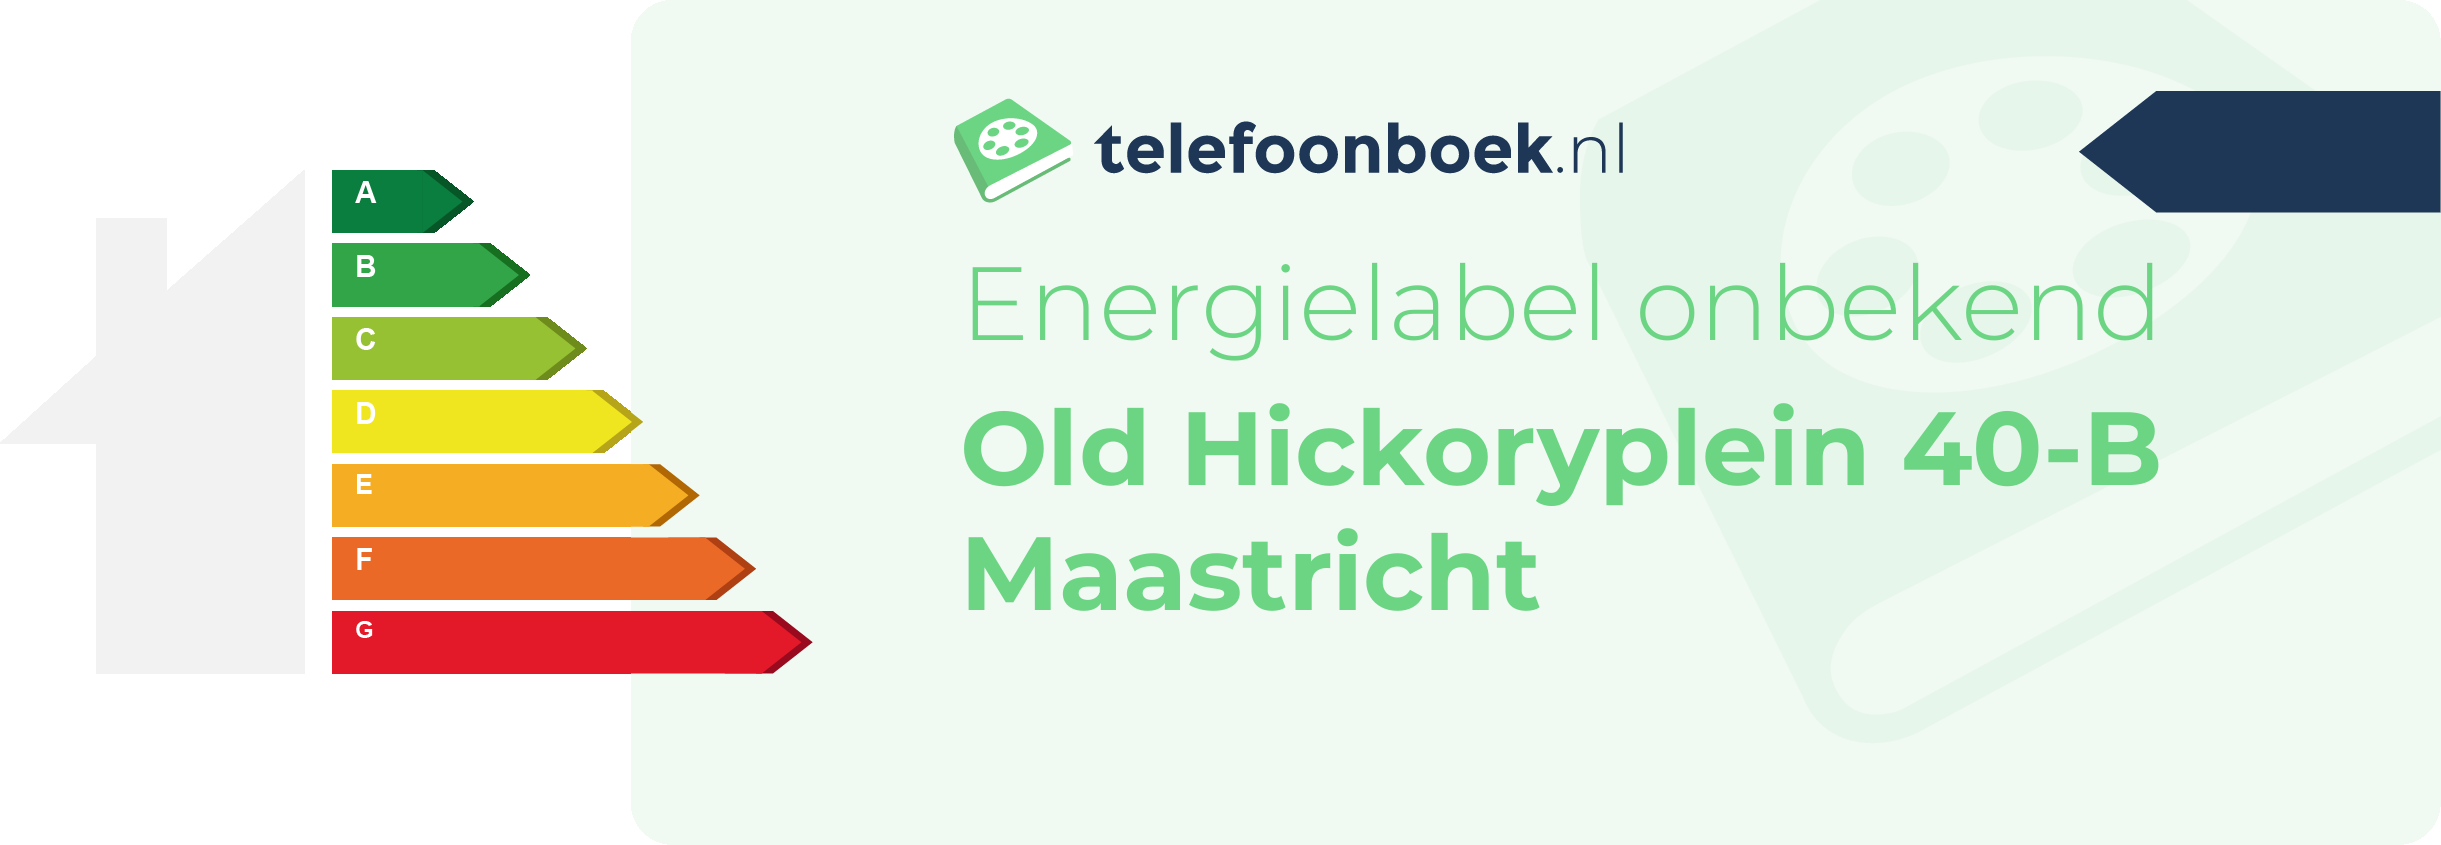 Energielabel Old Hickoryplein 40-B Maastricht